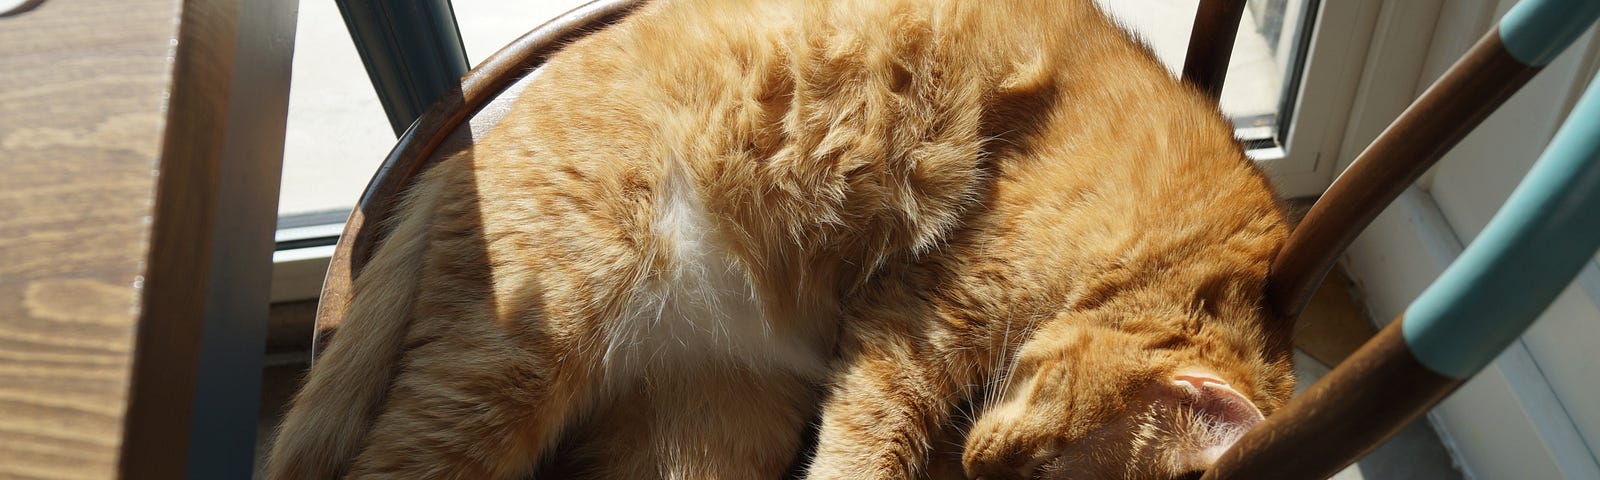 An orange cat sleeping on a chair under the sunlight.